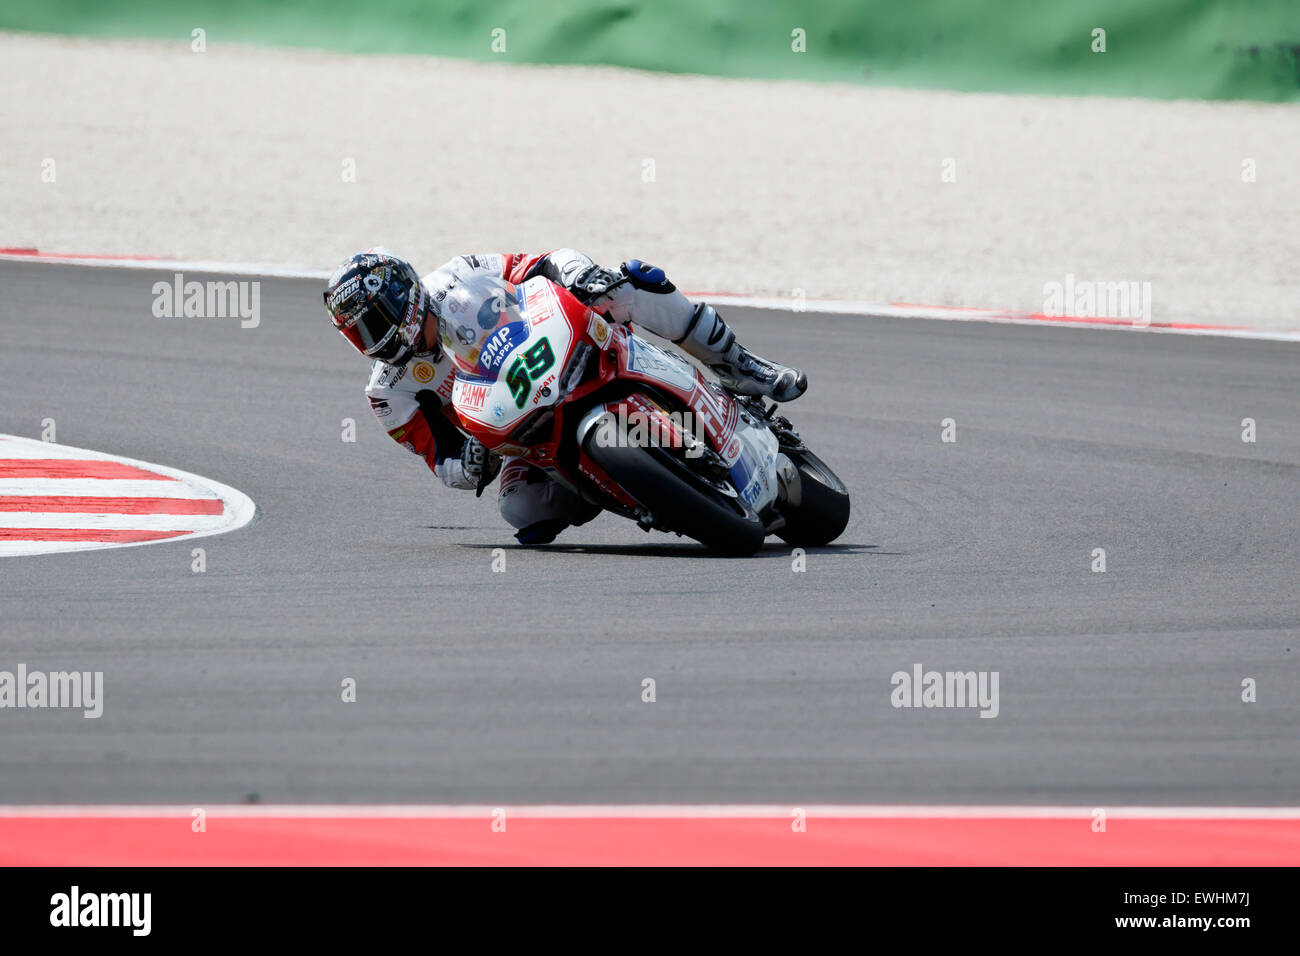 Misano Adriatico, Italy - June 20, 2015: Ducati Panigale R of Althea Racing Team, driven by CANEPA Niccolò Stock Photo